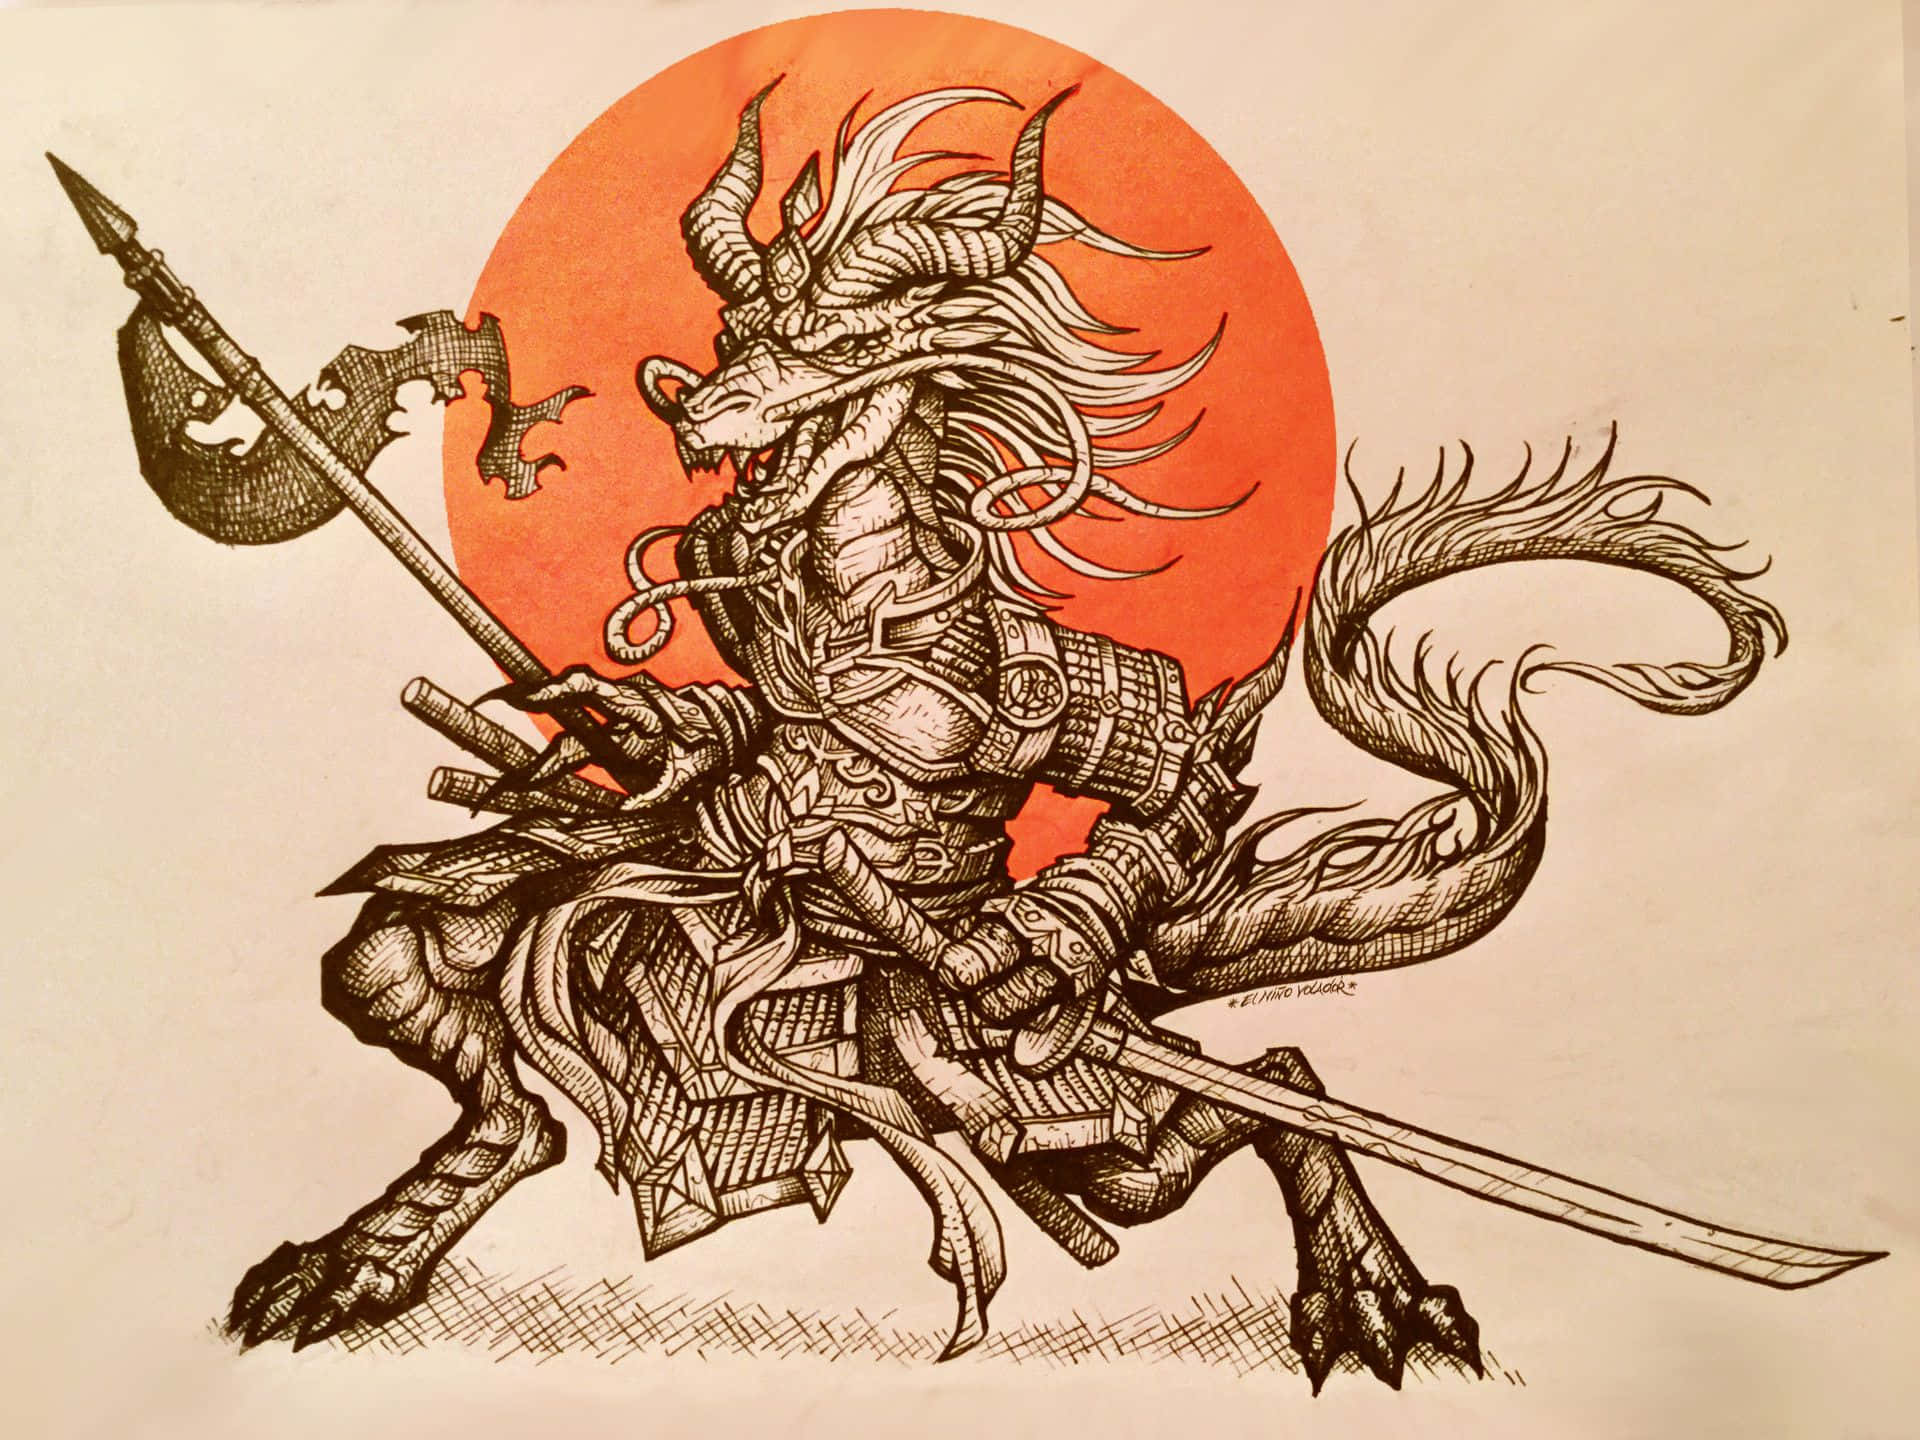 Fierce Samurai and Mythical Dragon Battle Wallpaper